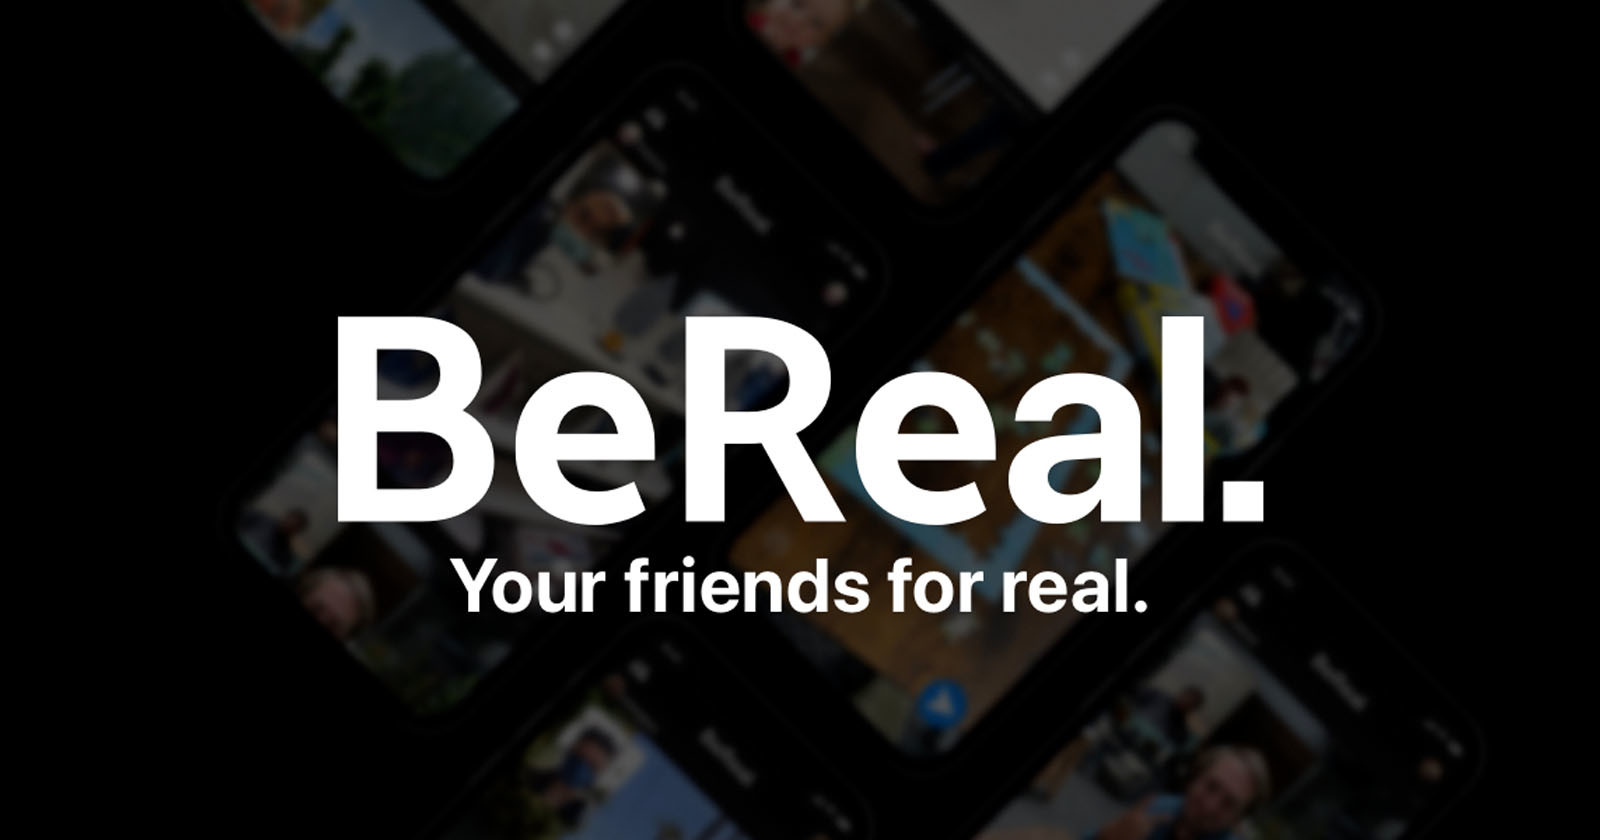  bereal photo-sharing app limits one photo 